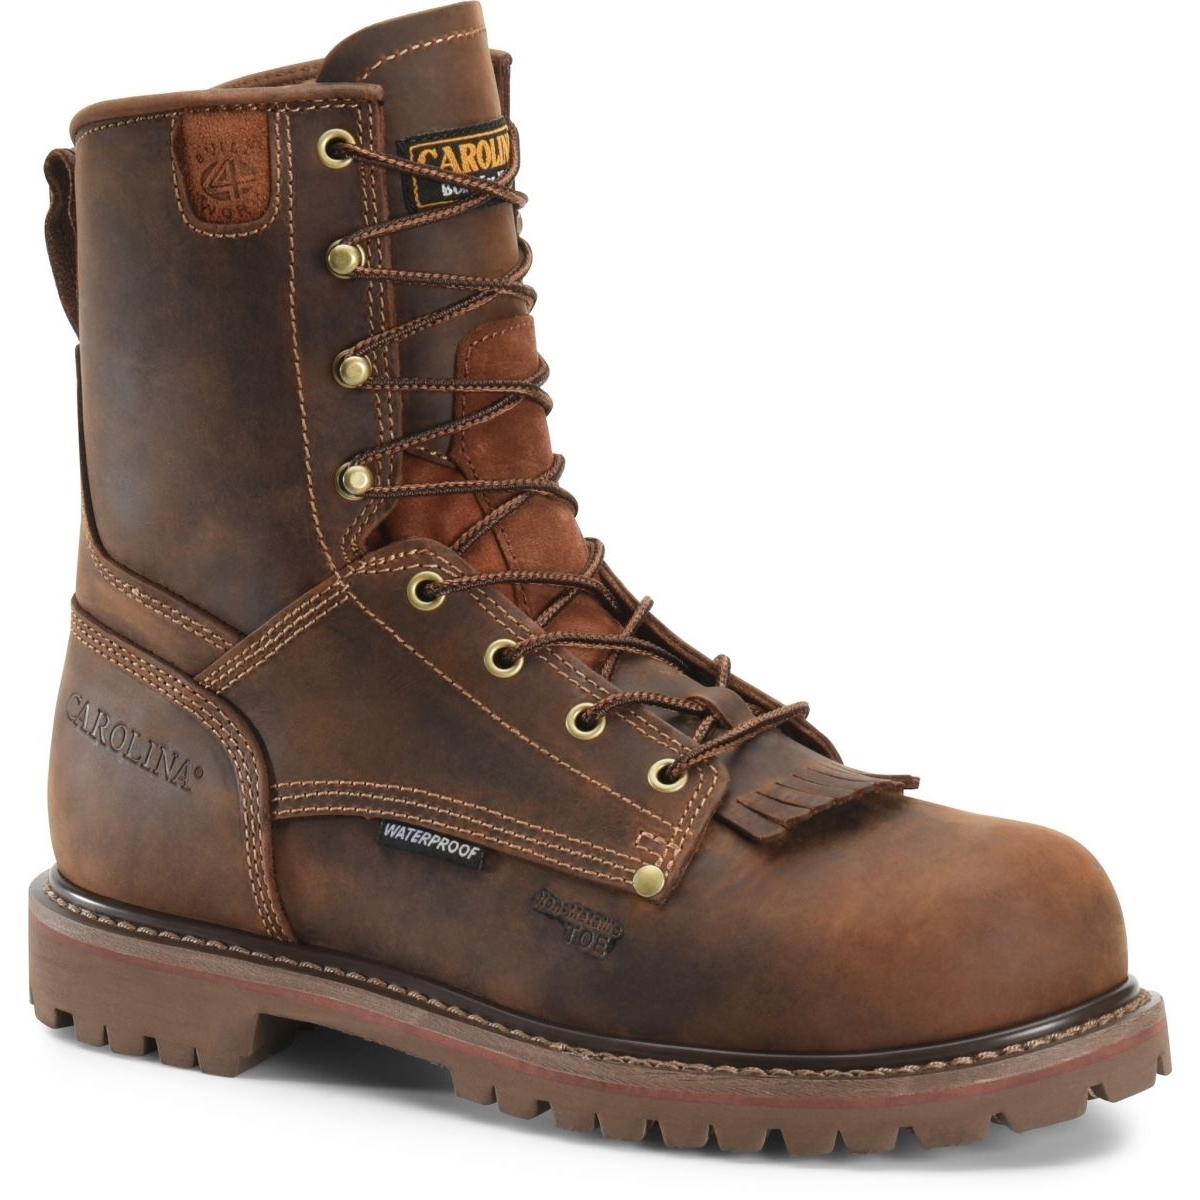 CAROLINA Men's 28 Series 8 Composite Toe Waterproof Work Boot Brown - CA8528 DARK BROWN - DARK BROWN, 11 WIDE